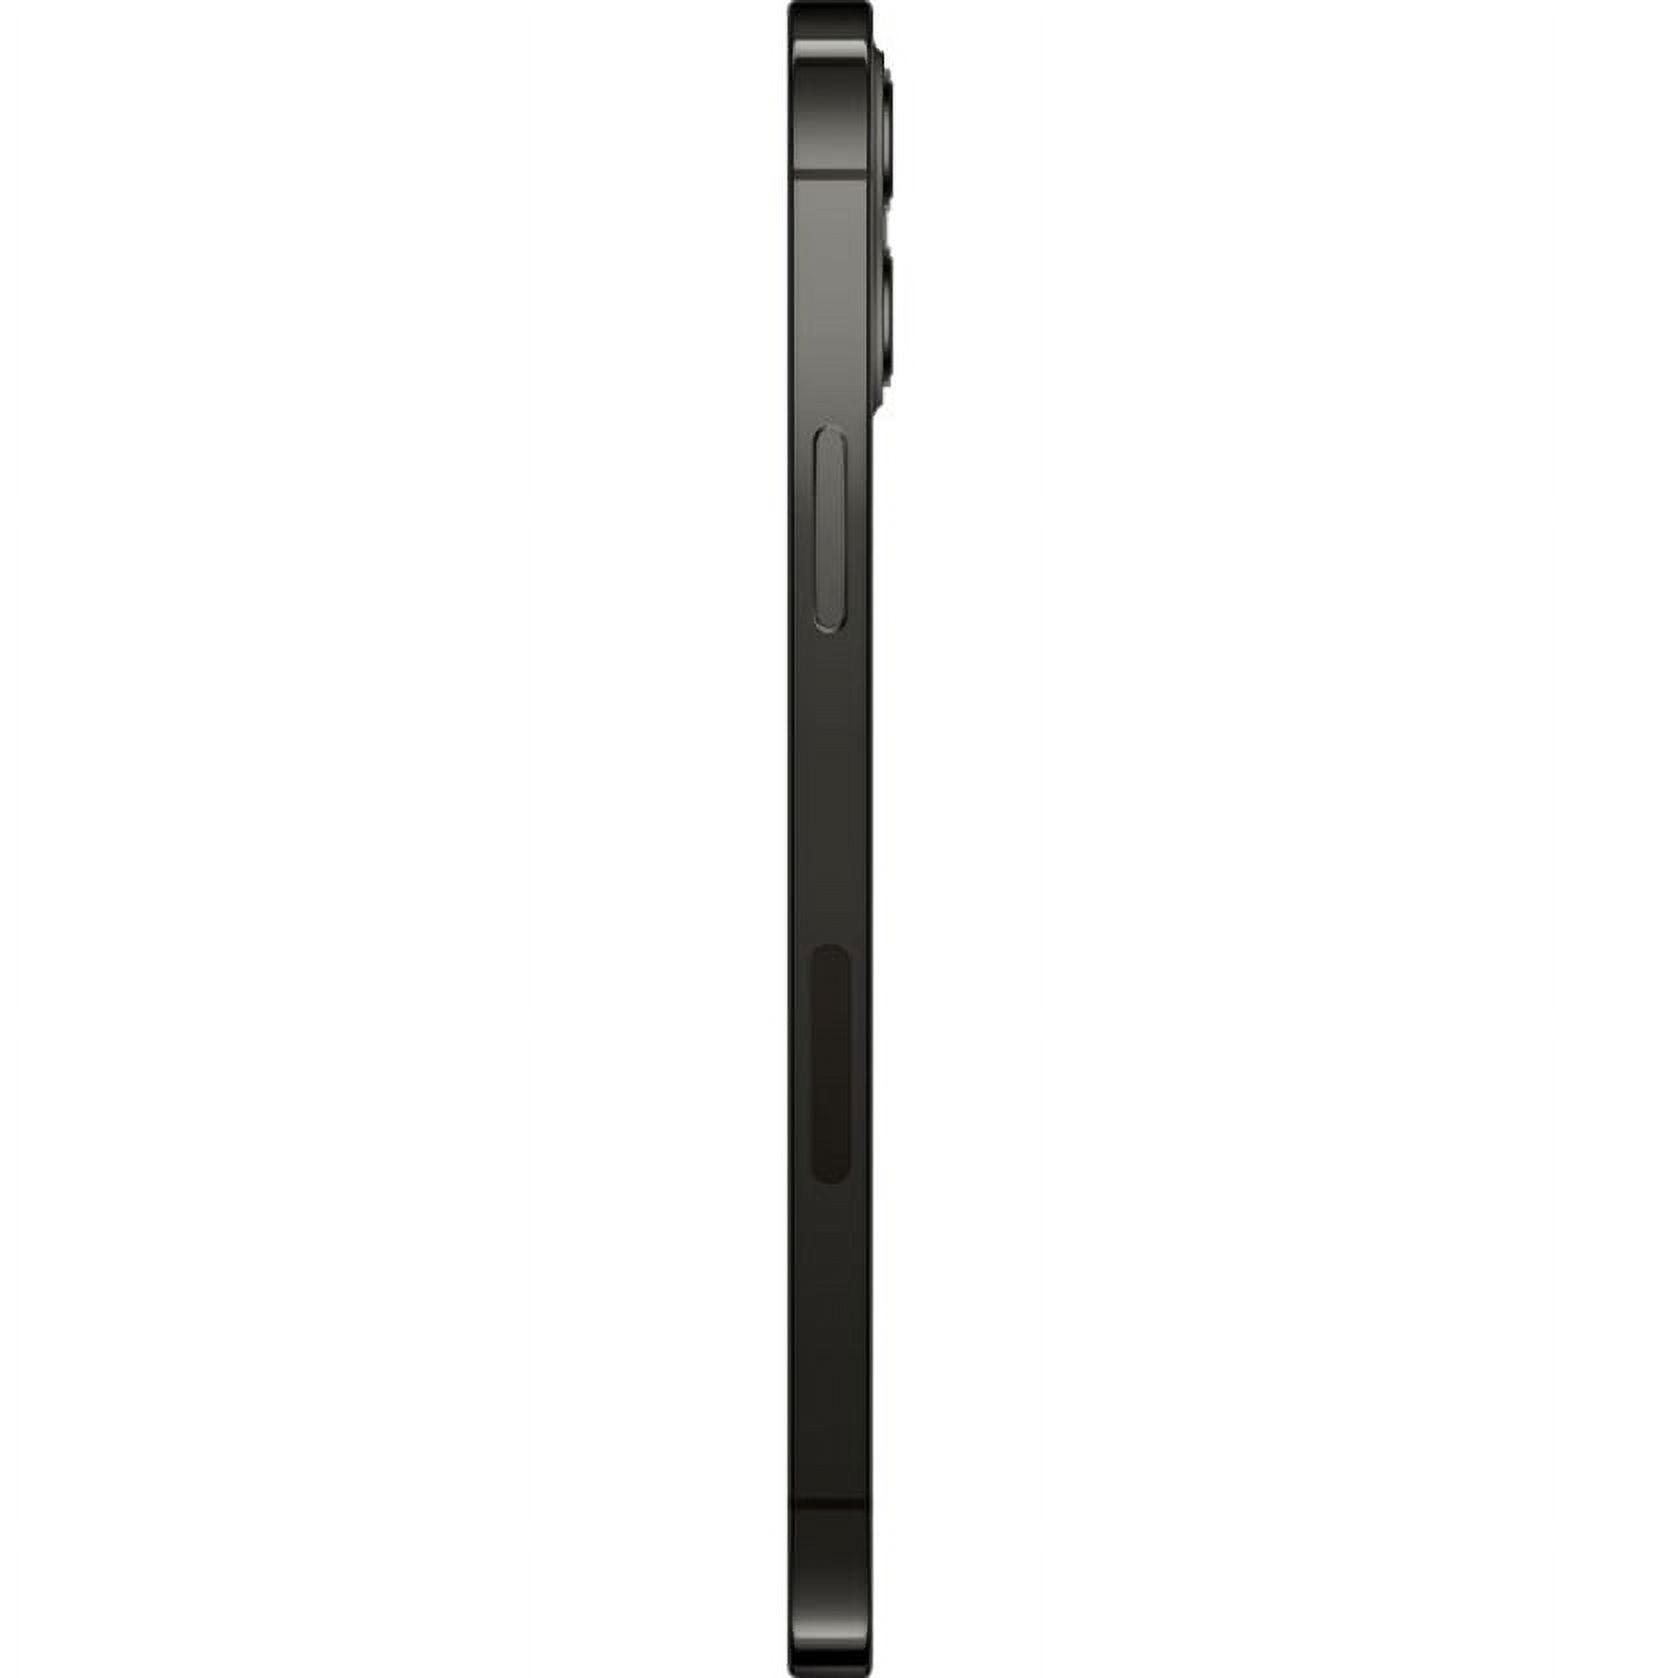 Restored Apple iPhone 12 Pro 128GB Graphite Smartphone (Refurbished) - image 2 of 11